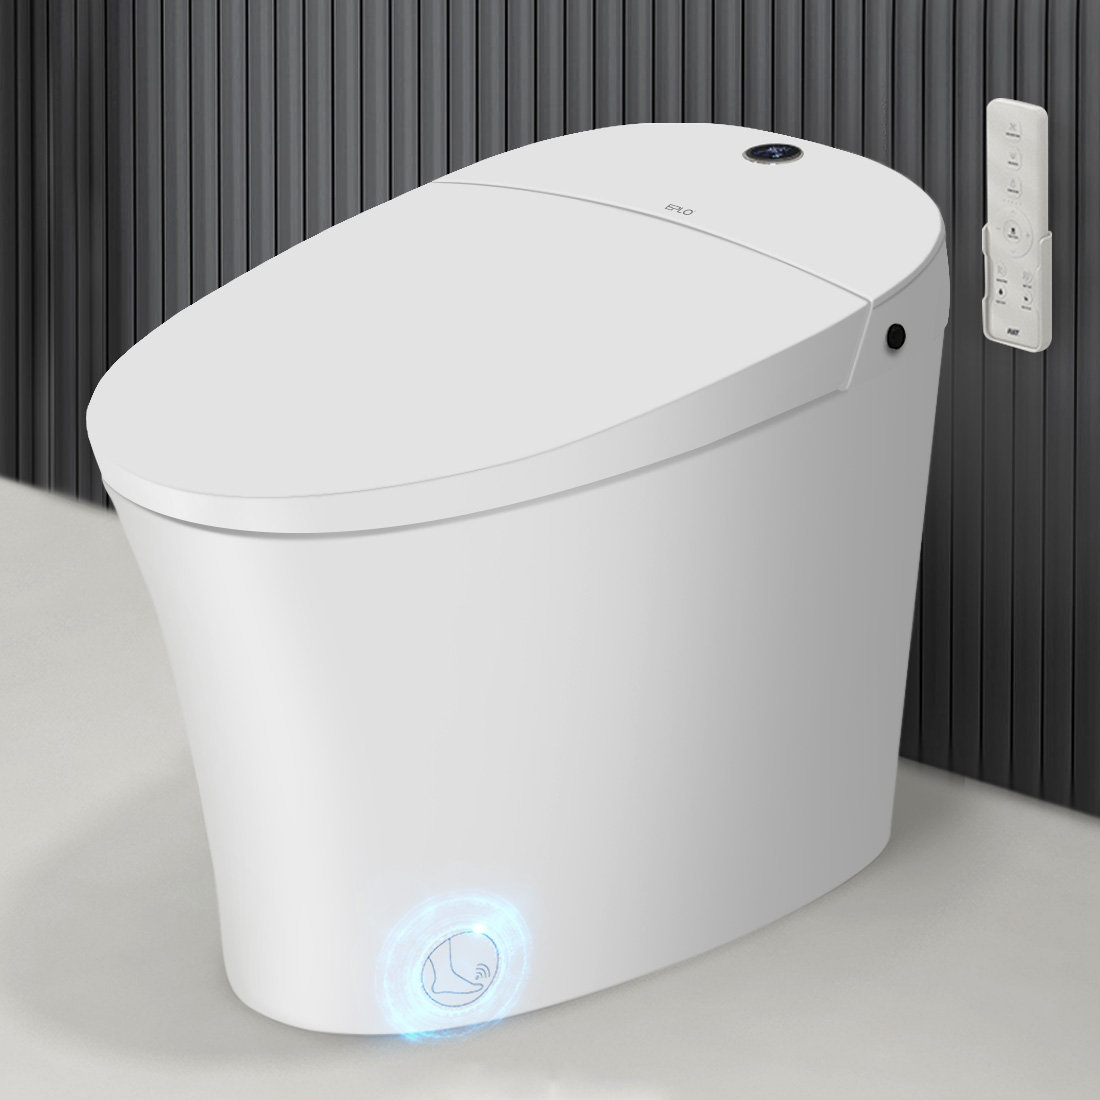 EPLO Smart Bidet Toilet, Dual-Flush Elongated Toilet Bidet,Warm